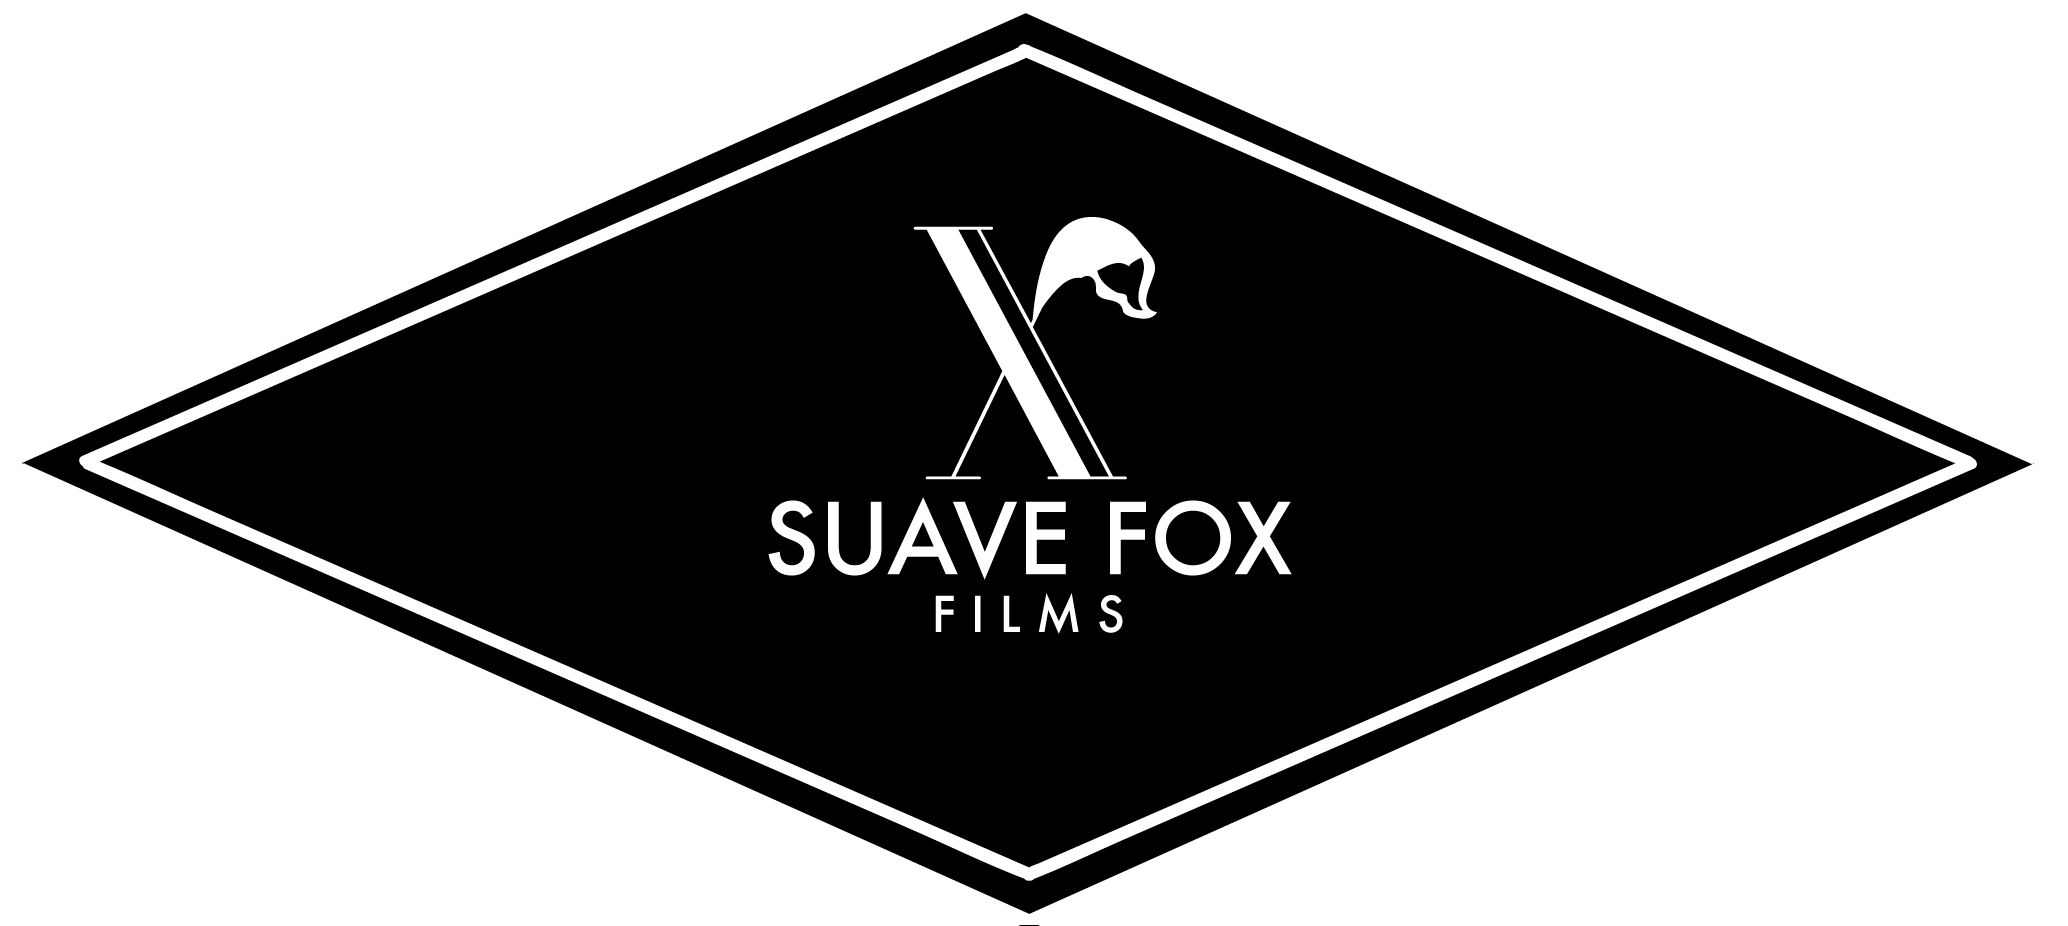 Suave Fox Films